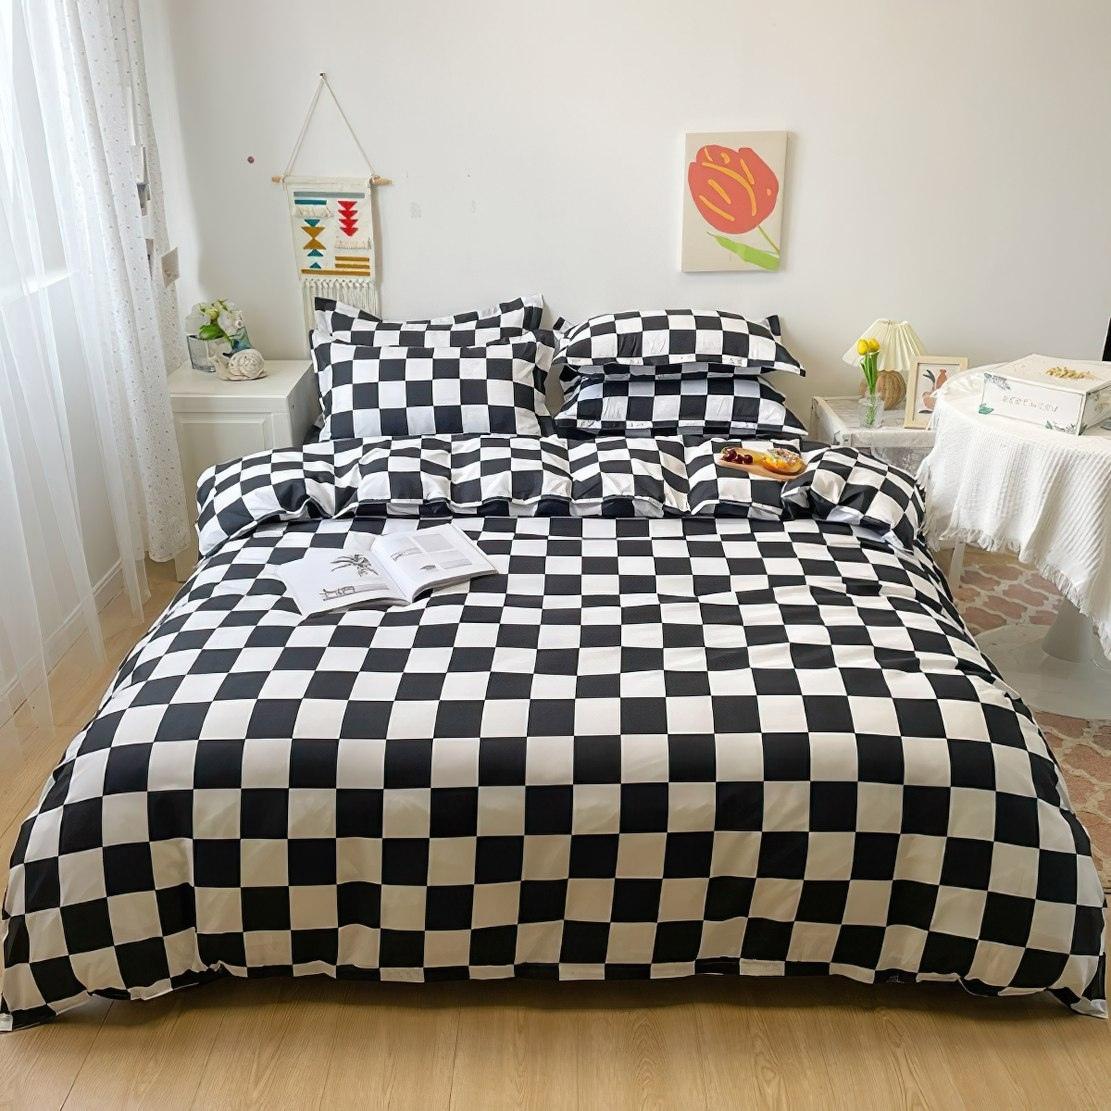 Black white checkerboard pattern bedding set